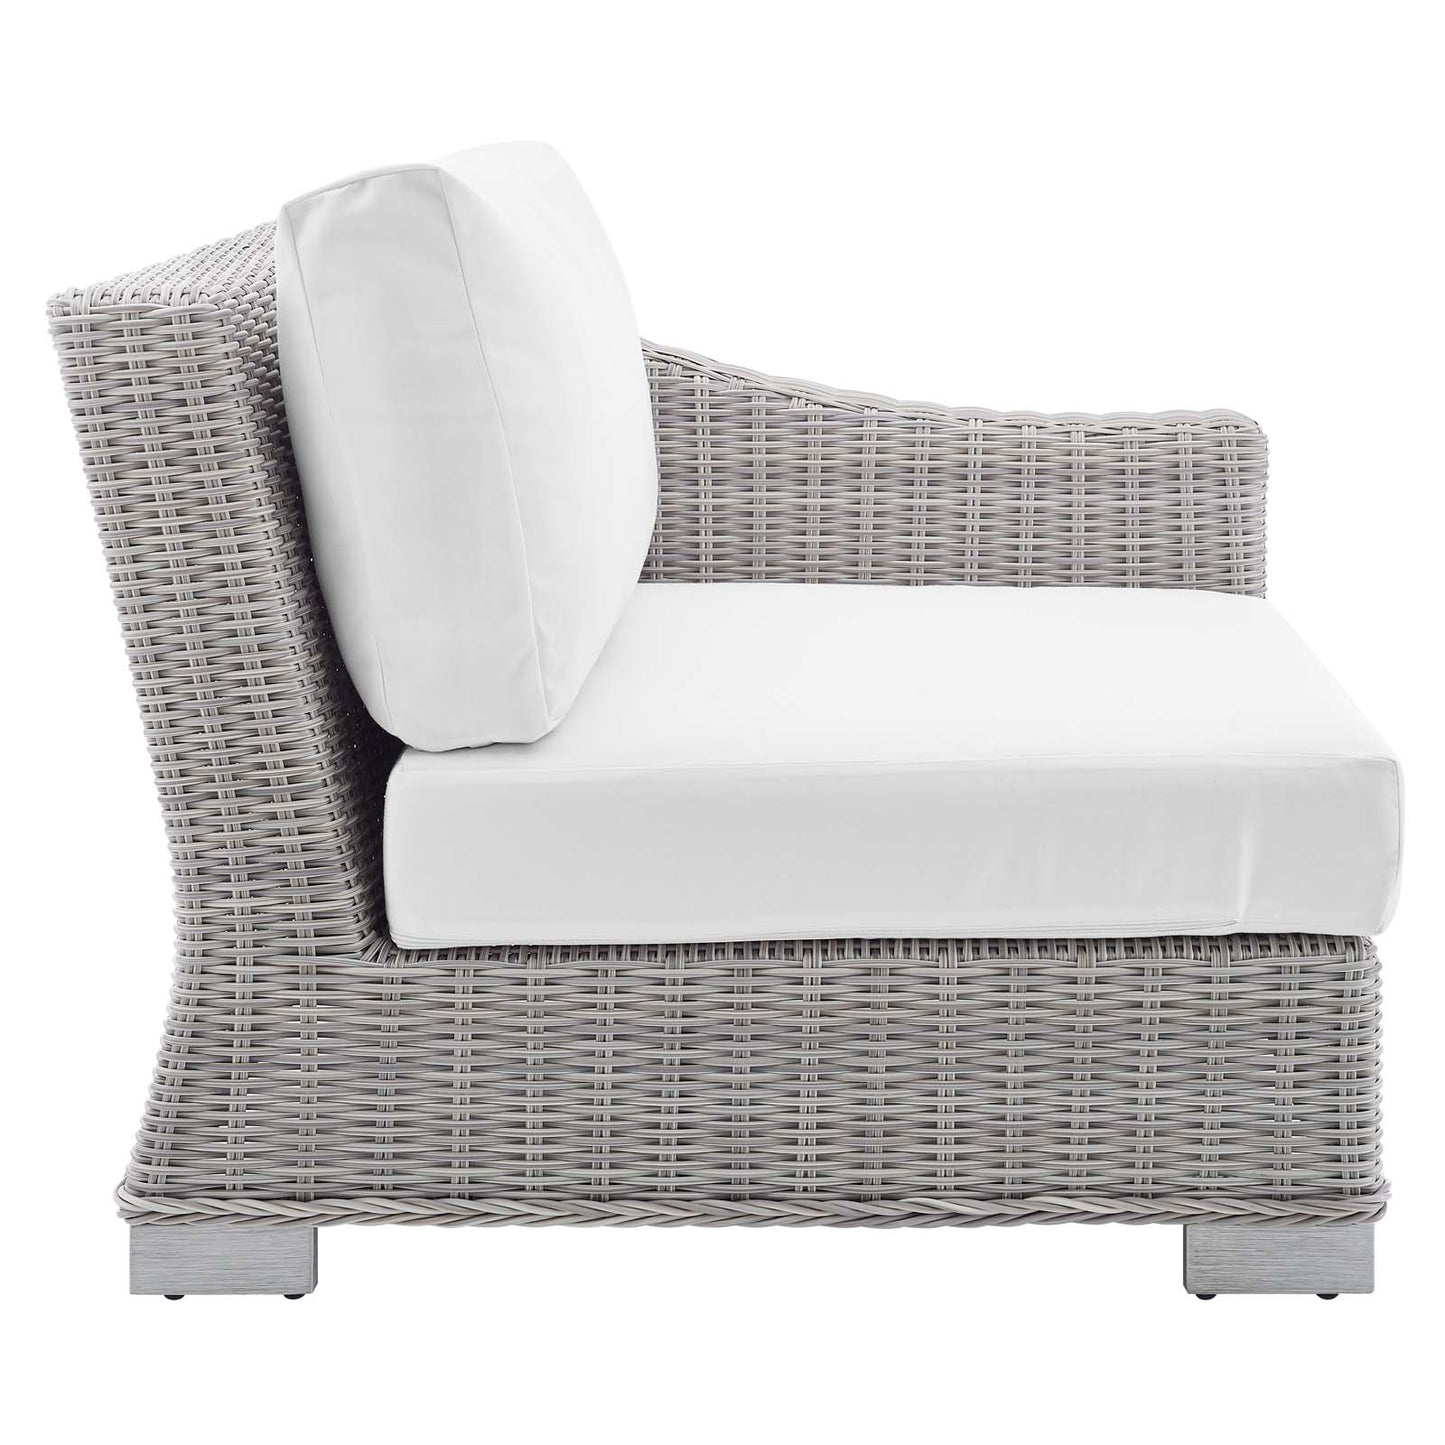 Conway Sunbrella® Outdoor Patio Wicker Rattan 6-Piece Furniture Set Light Gray White EEI-4363-LGR-WHI